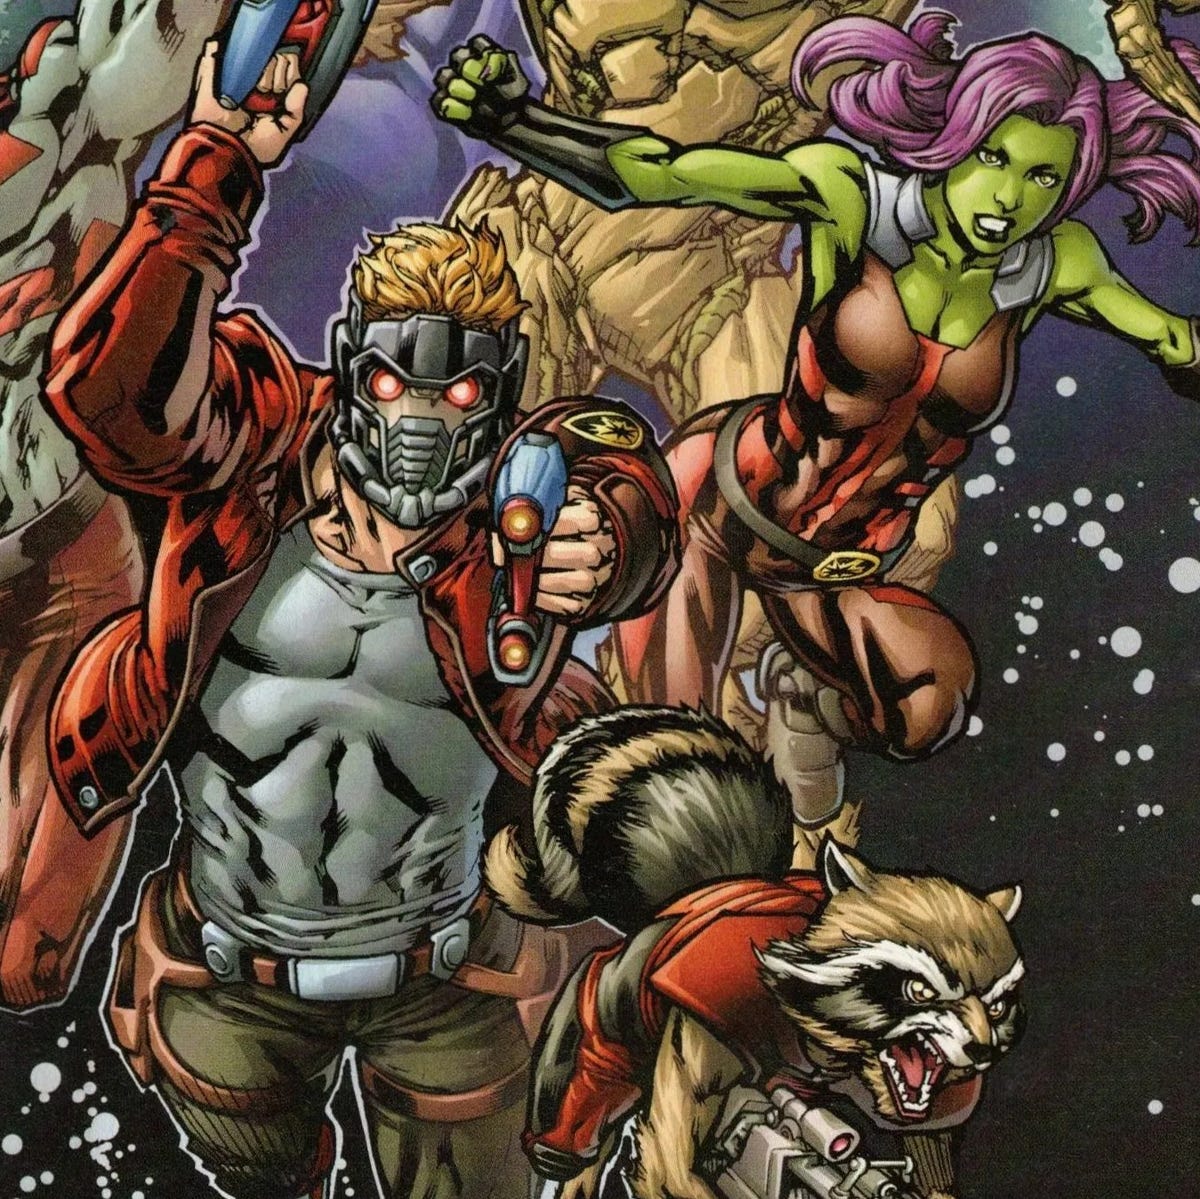 marvel comics guardians of the galaxy